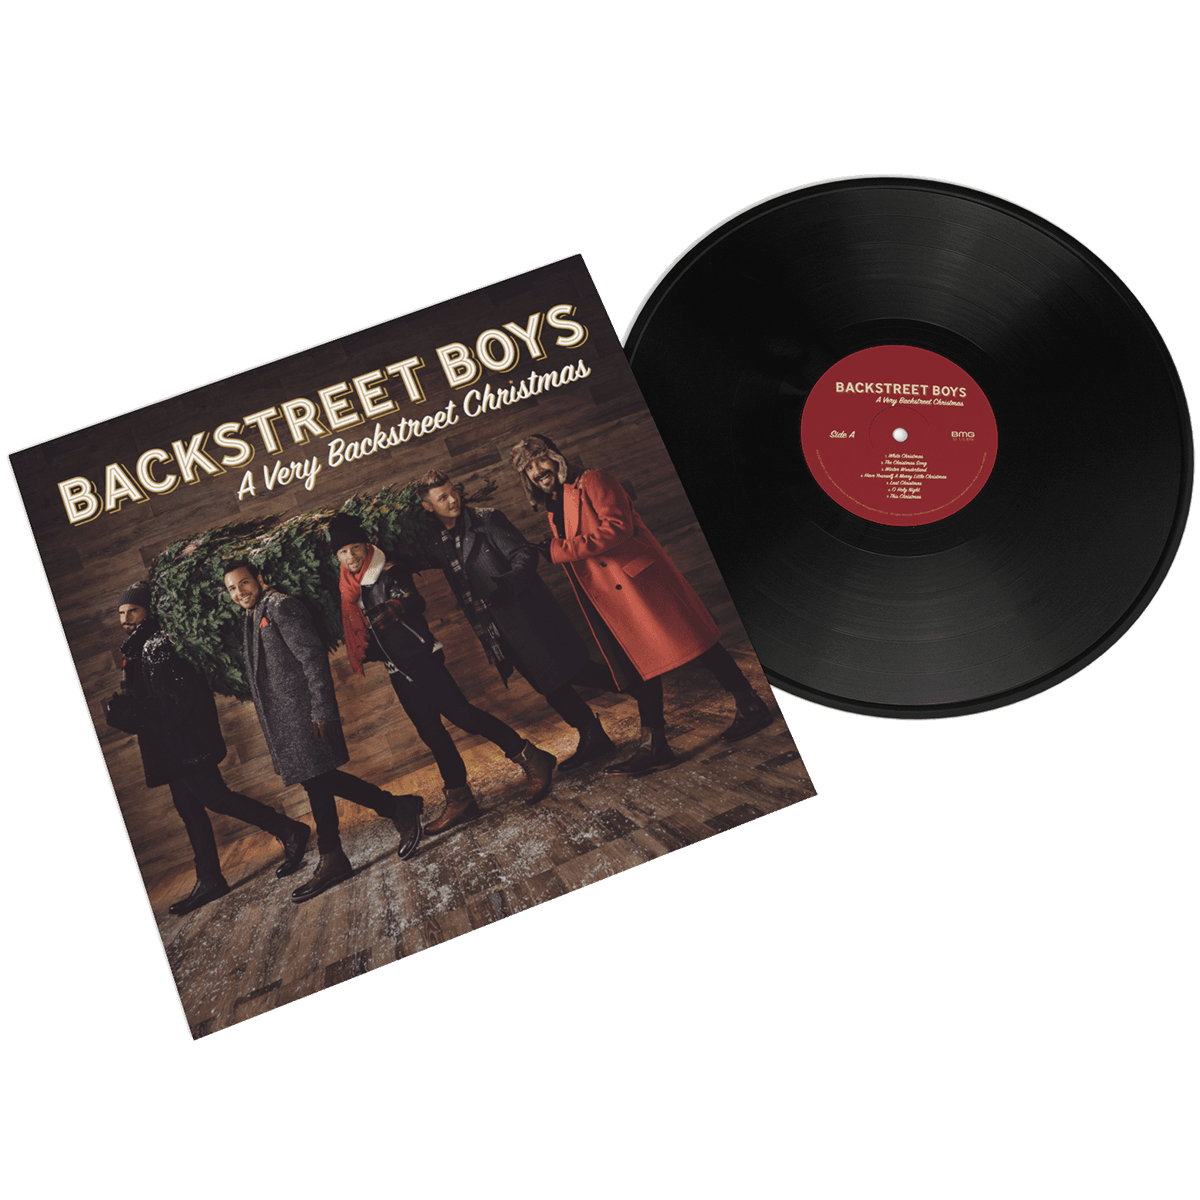 A Very Backstreet Christmas Standard Vinyl Record